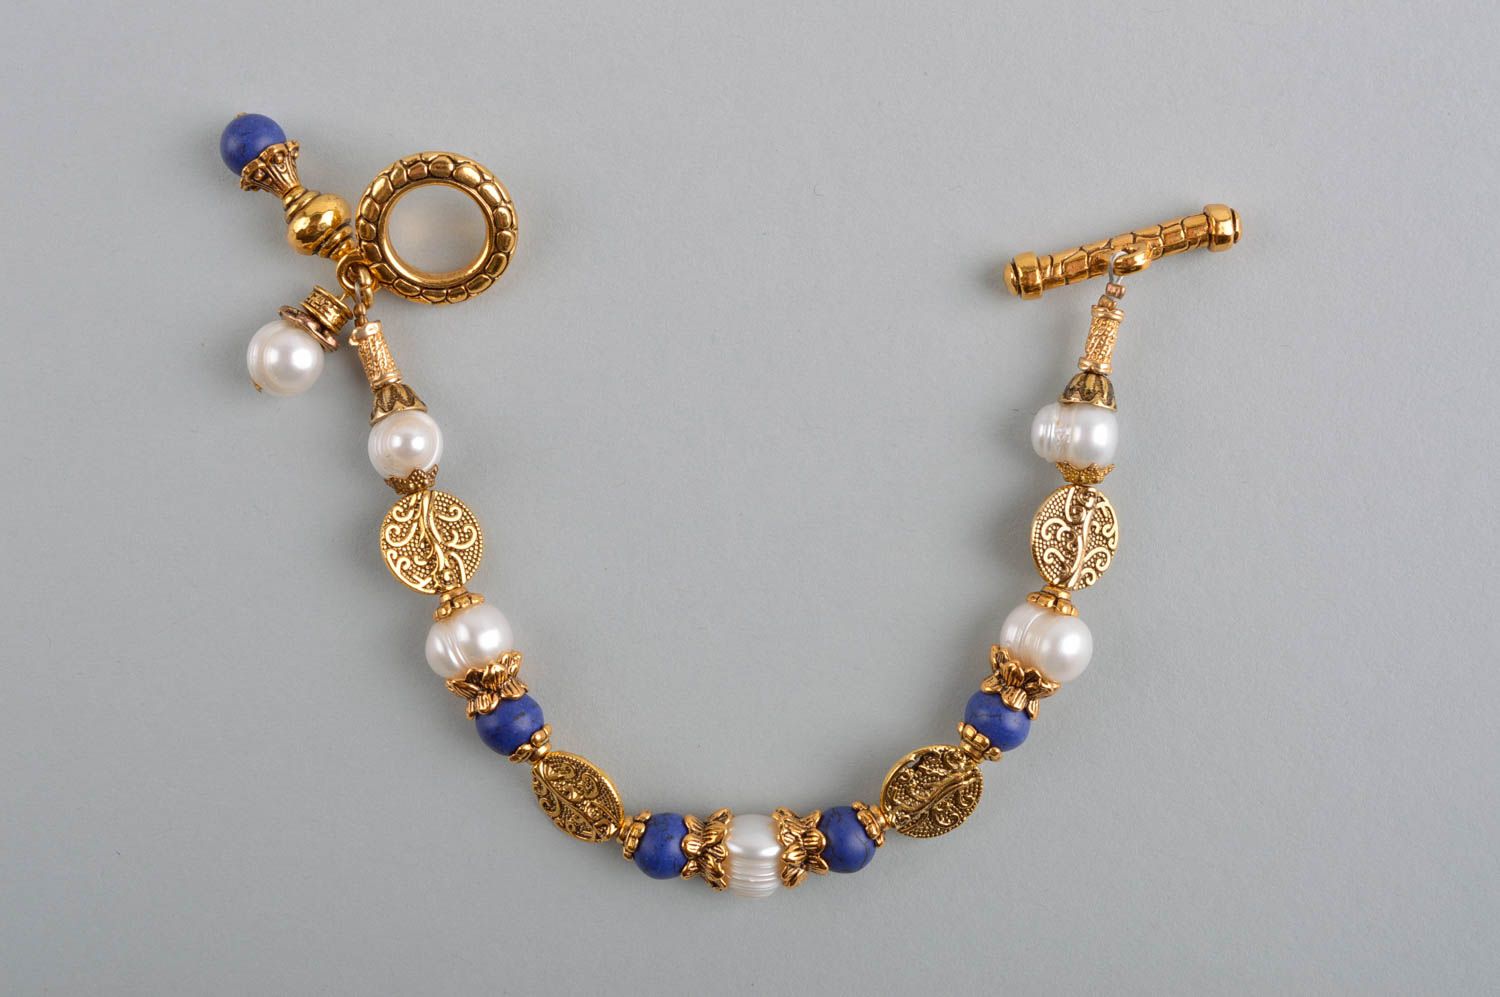 Homemade white and blue beads charm bracelet gemstone jewelry for women photo 5